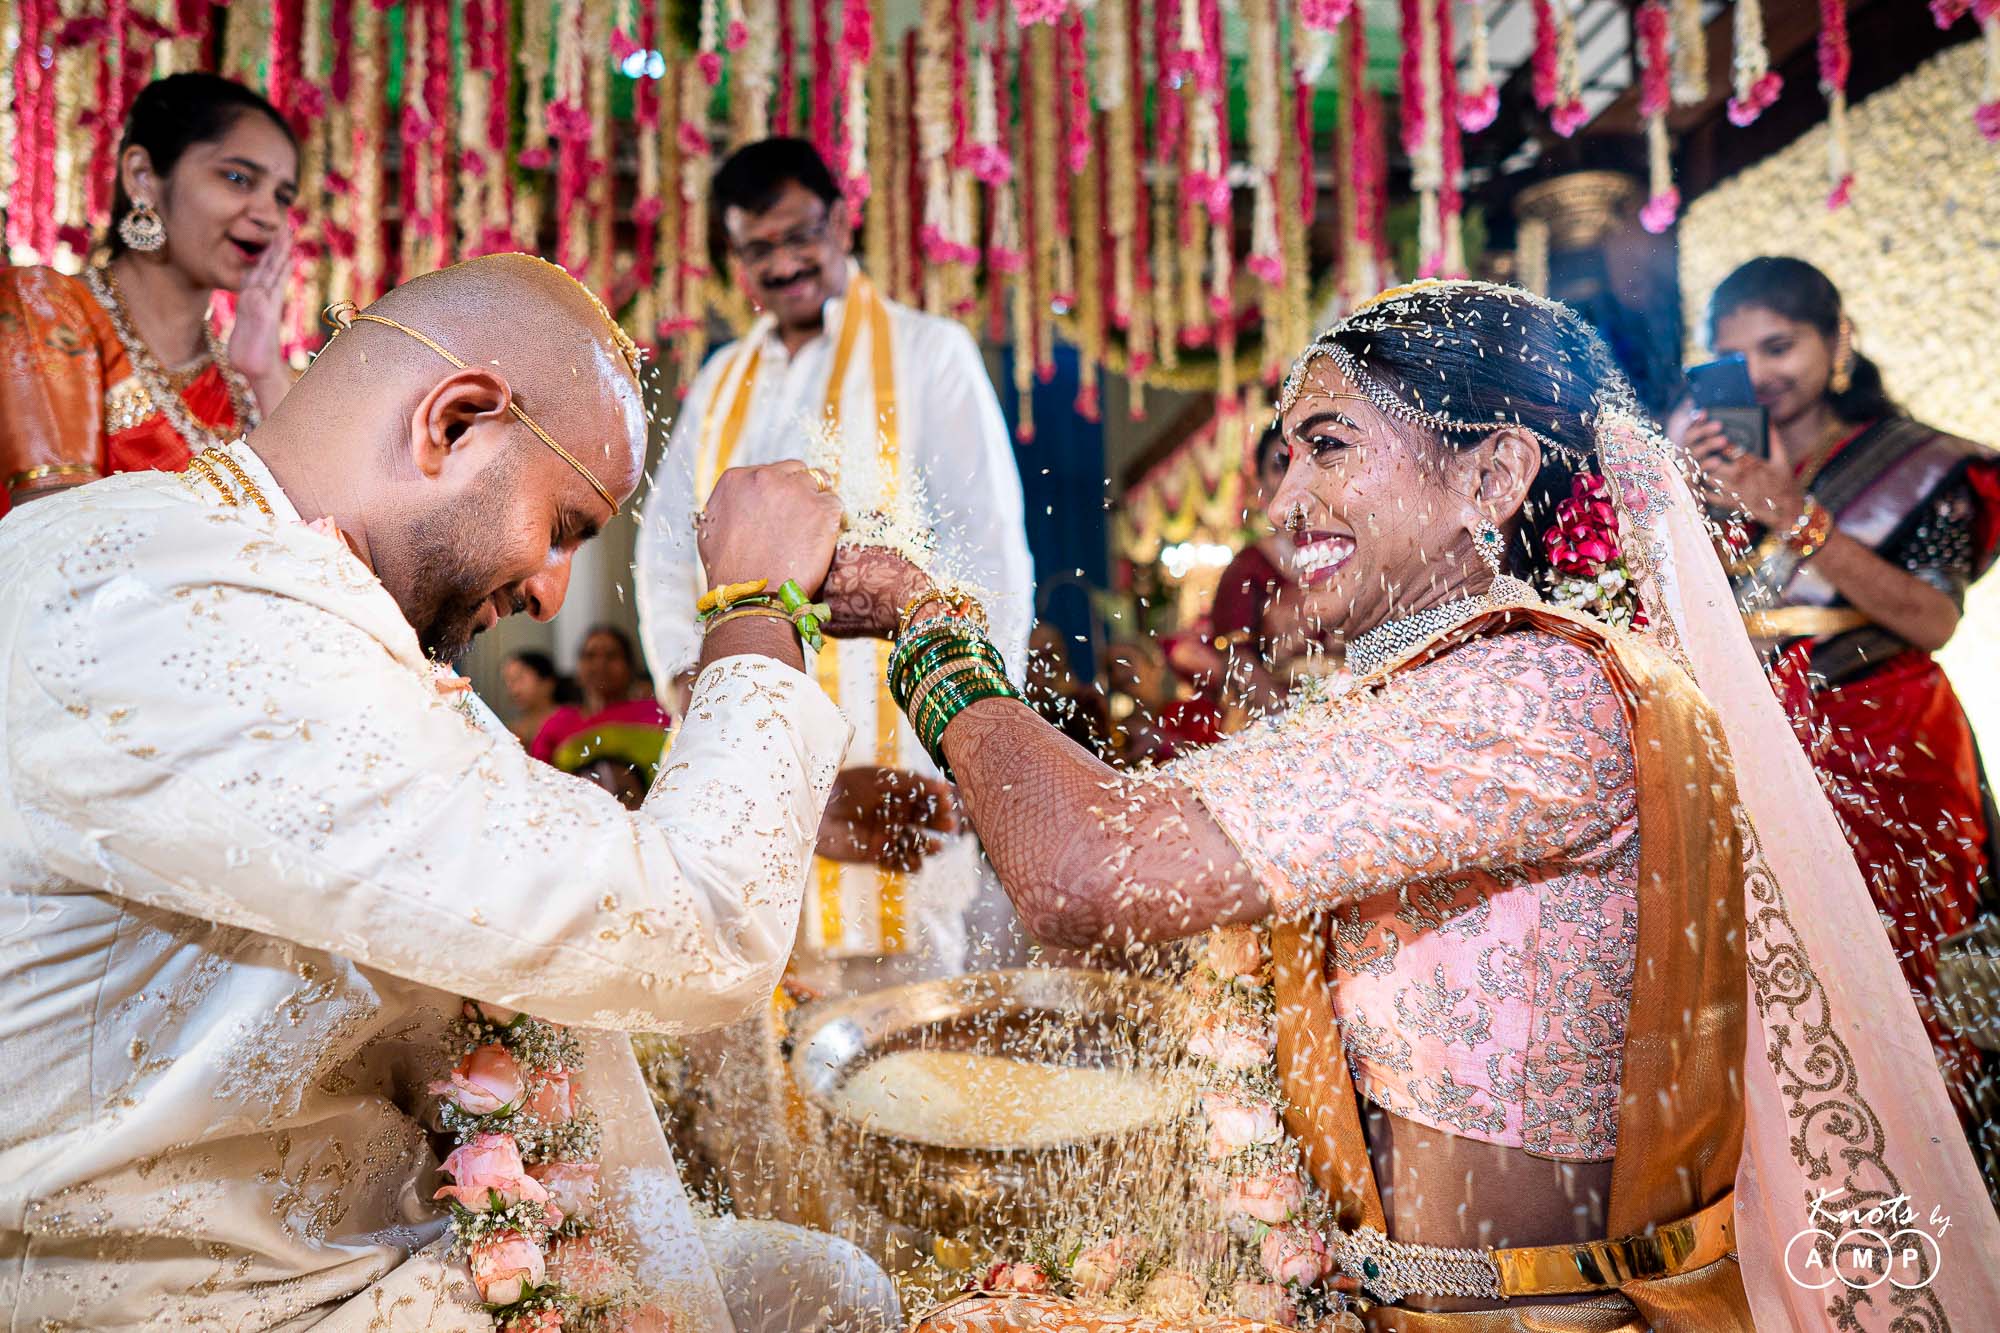 Arjun & Tejaswi - Best Telugu Wedding Photography in Hyderabad - Wedding  Photographers in Chennai, Wedding Photography in Chennai